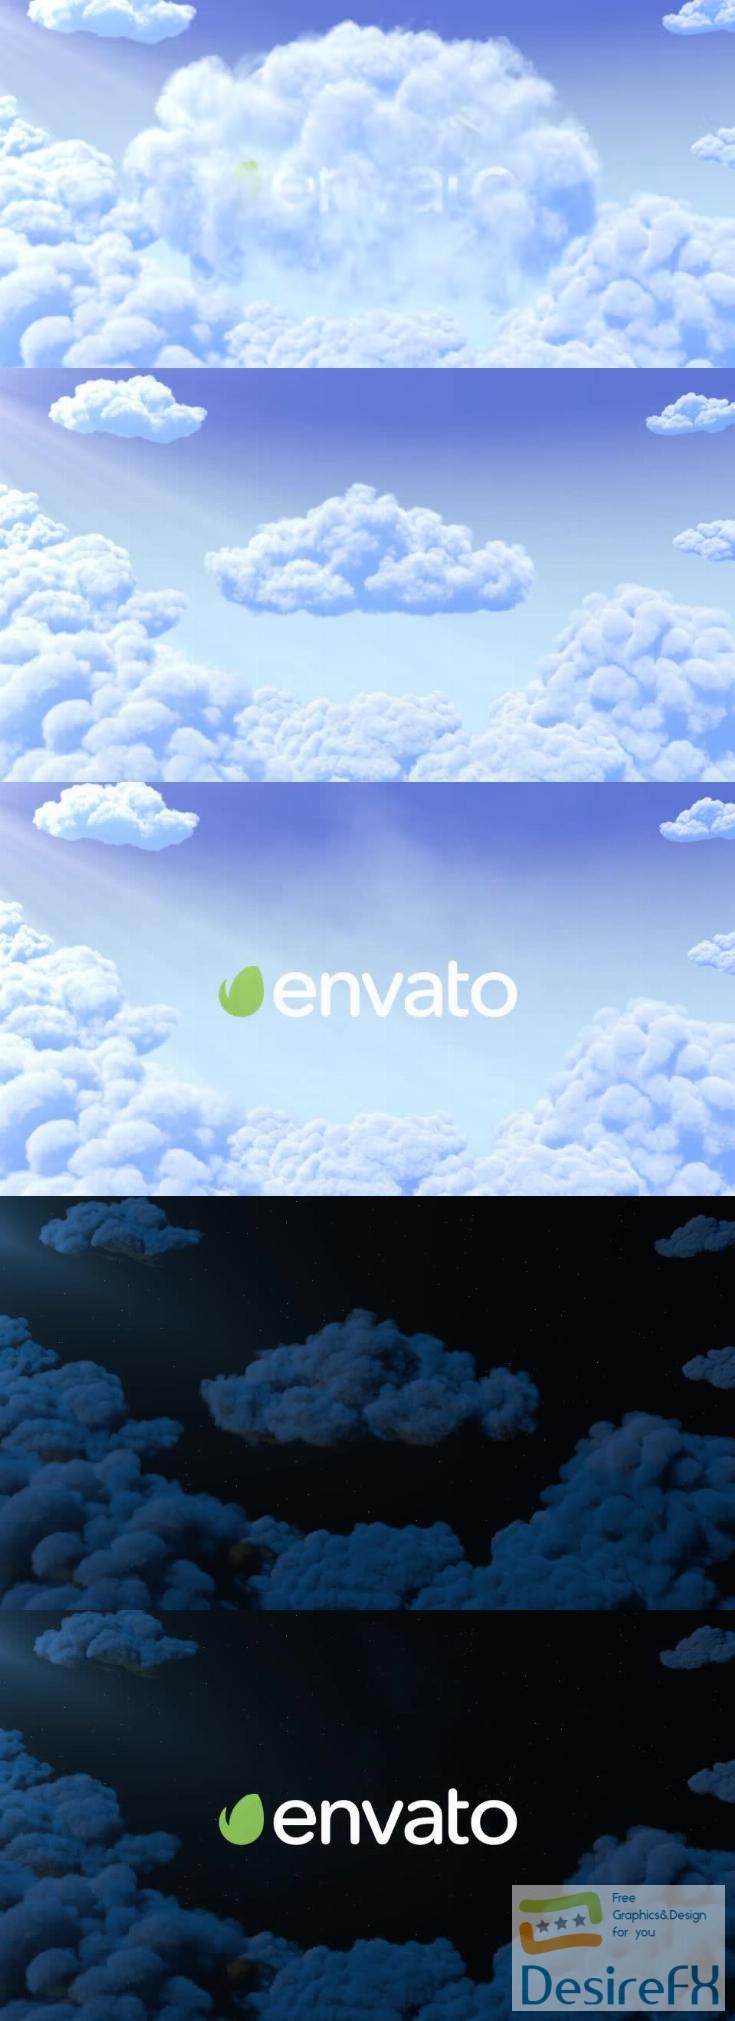 Videohive - Cloud Logo - 20543720